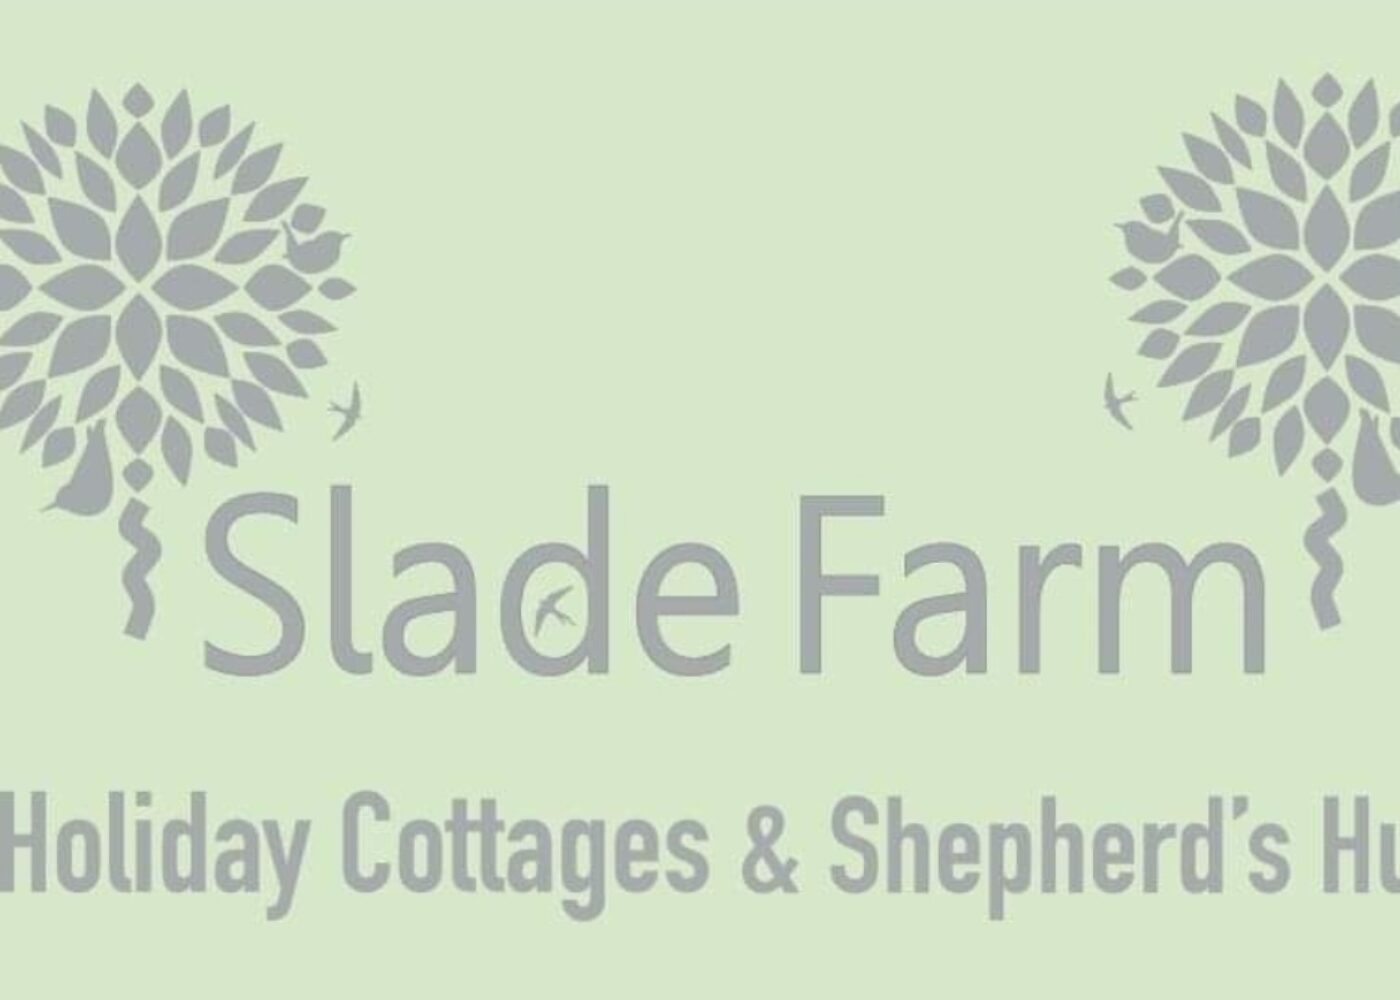 slade farm logo